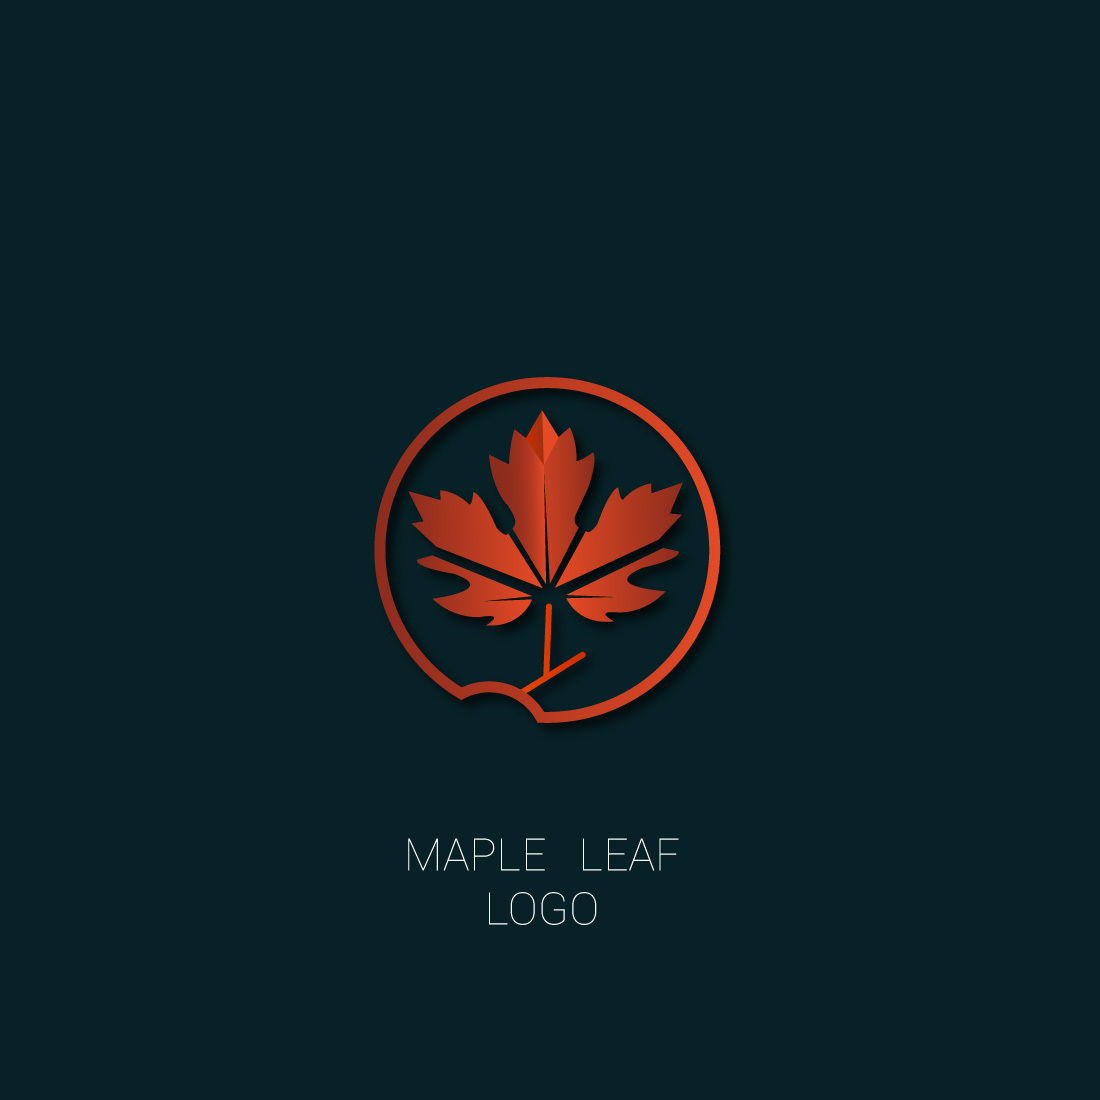 Maple leaf logo cover image.